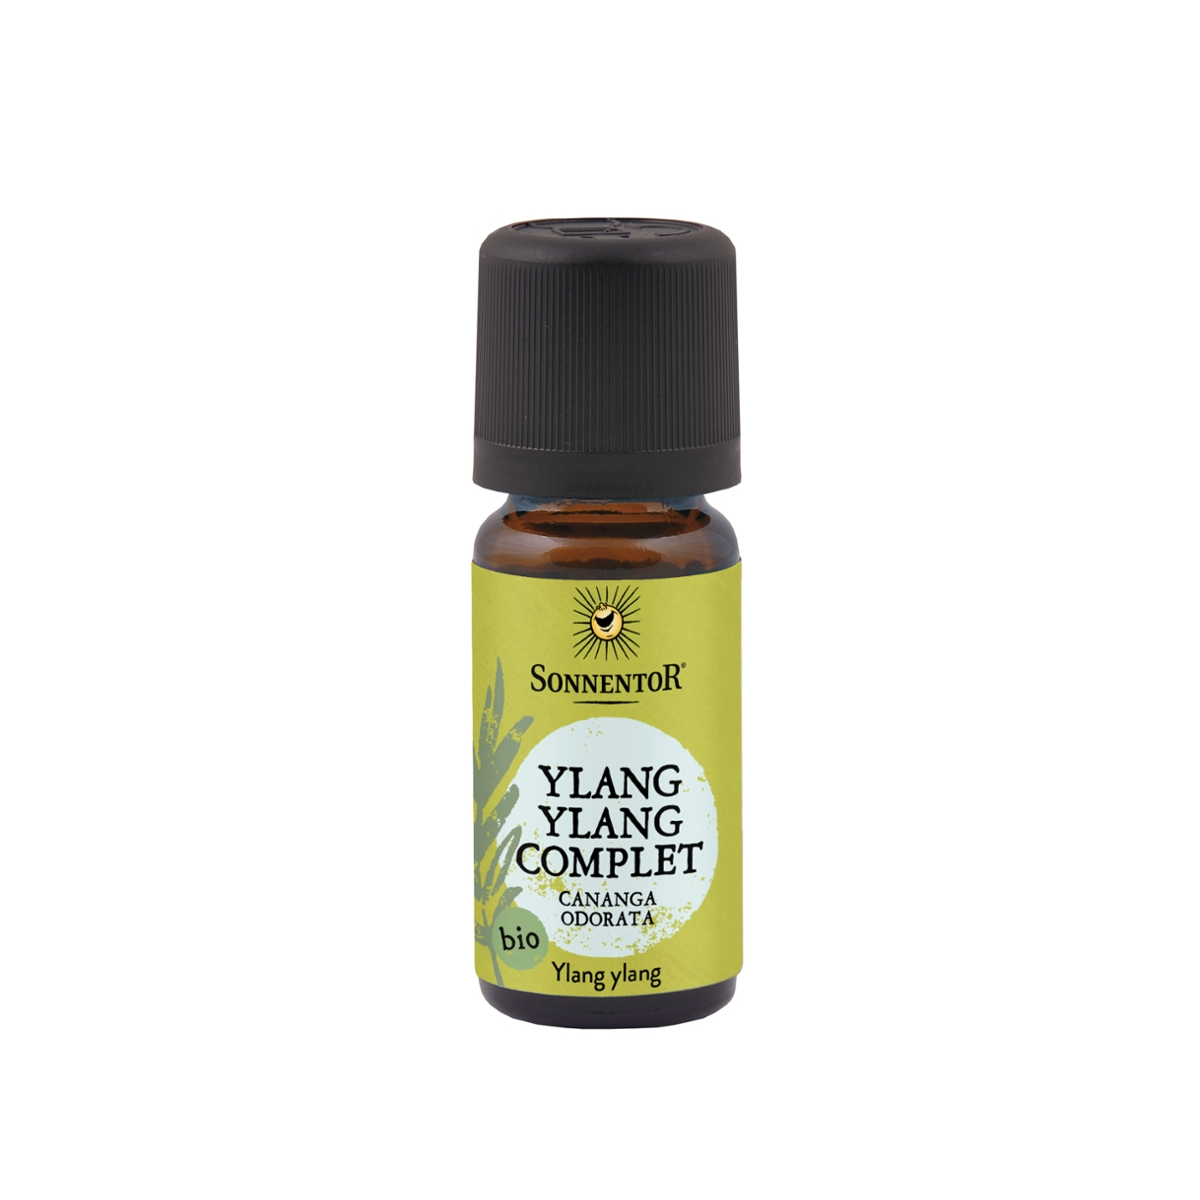 Sonnentor - Ylang Ylang ätherisches Öl